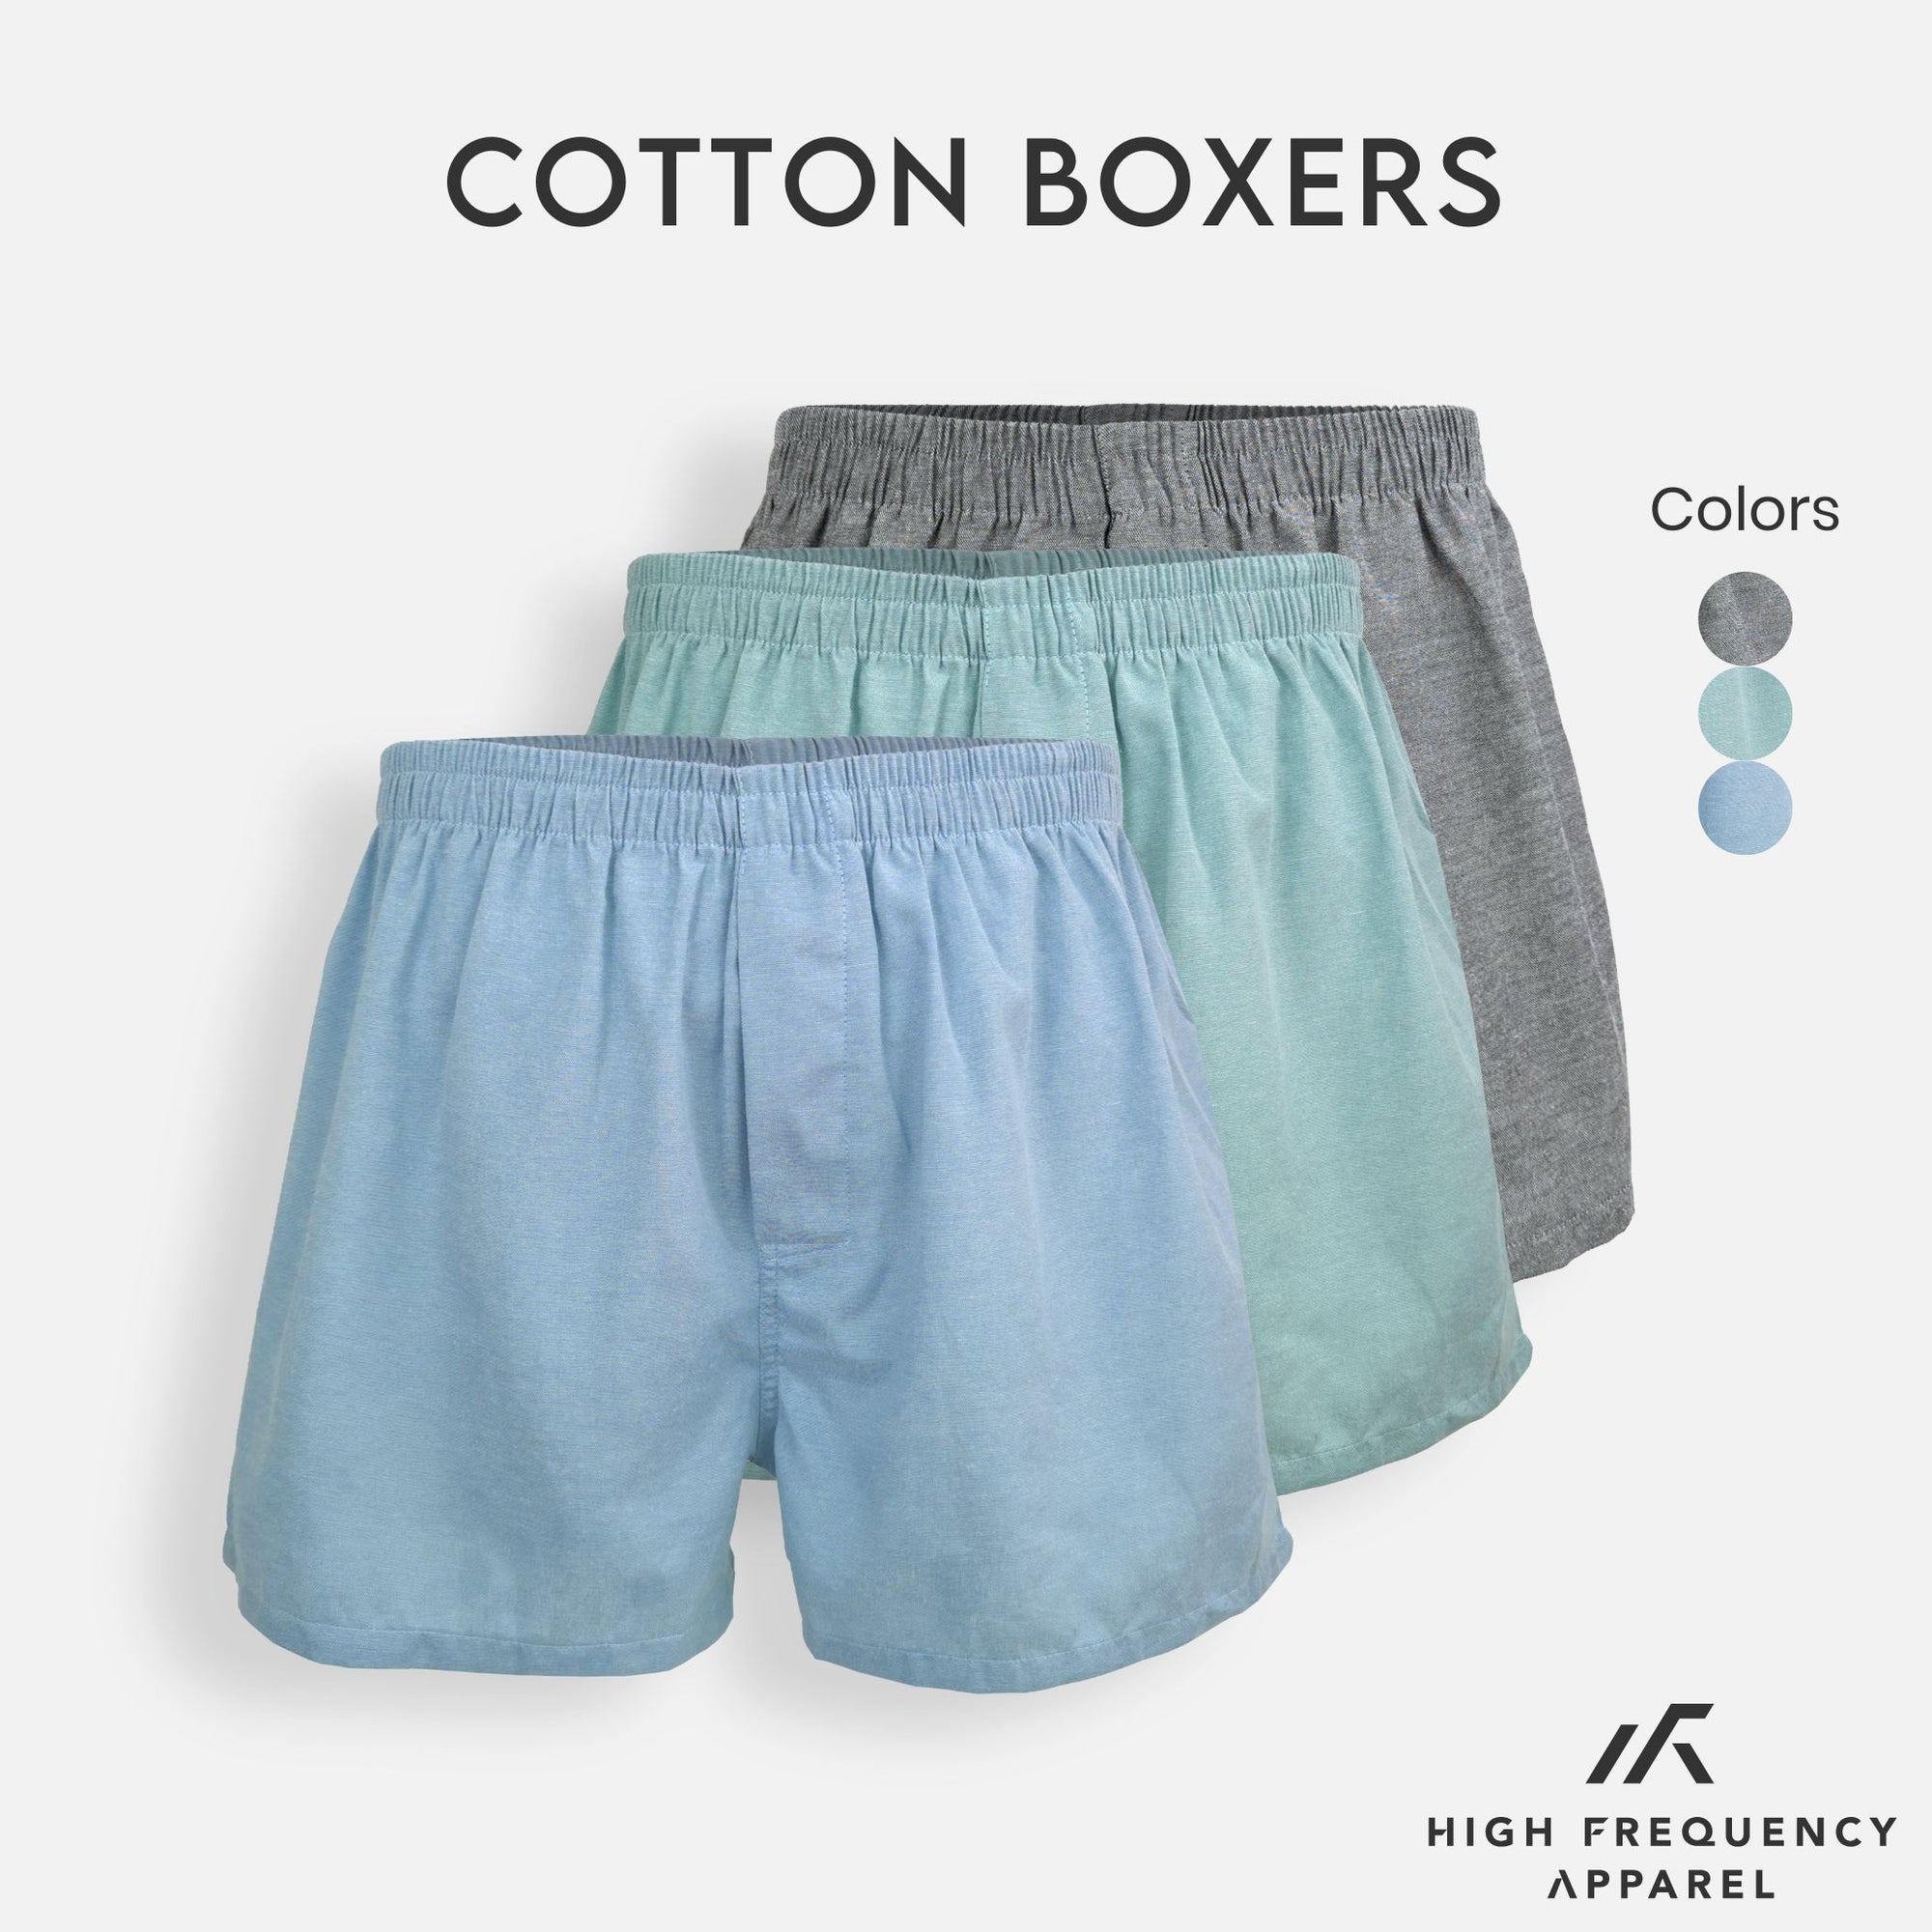 Cotton Boxers